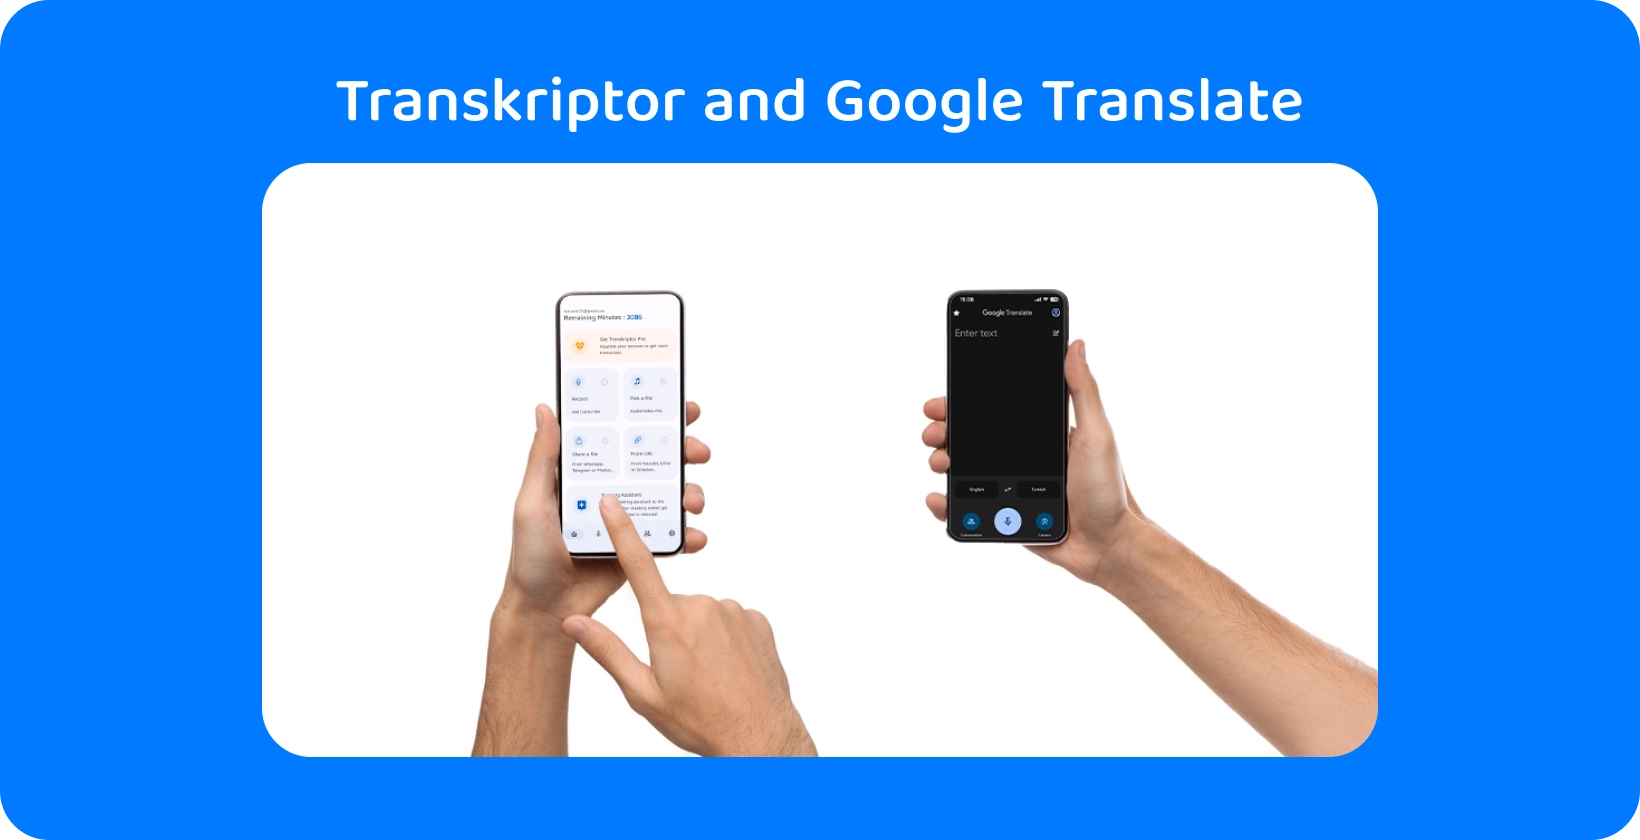 Transkriptor 및 Google Translate가 설치된 스마트폰을 들고 있는 두 손으로 오디오 전사 및 번역을 시연합니다.